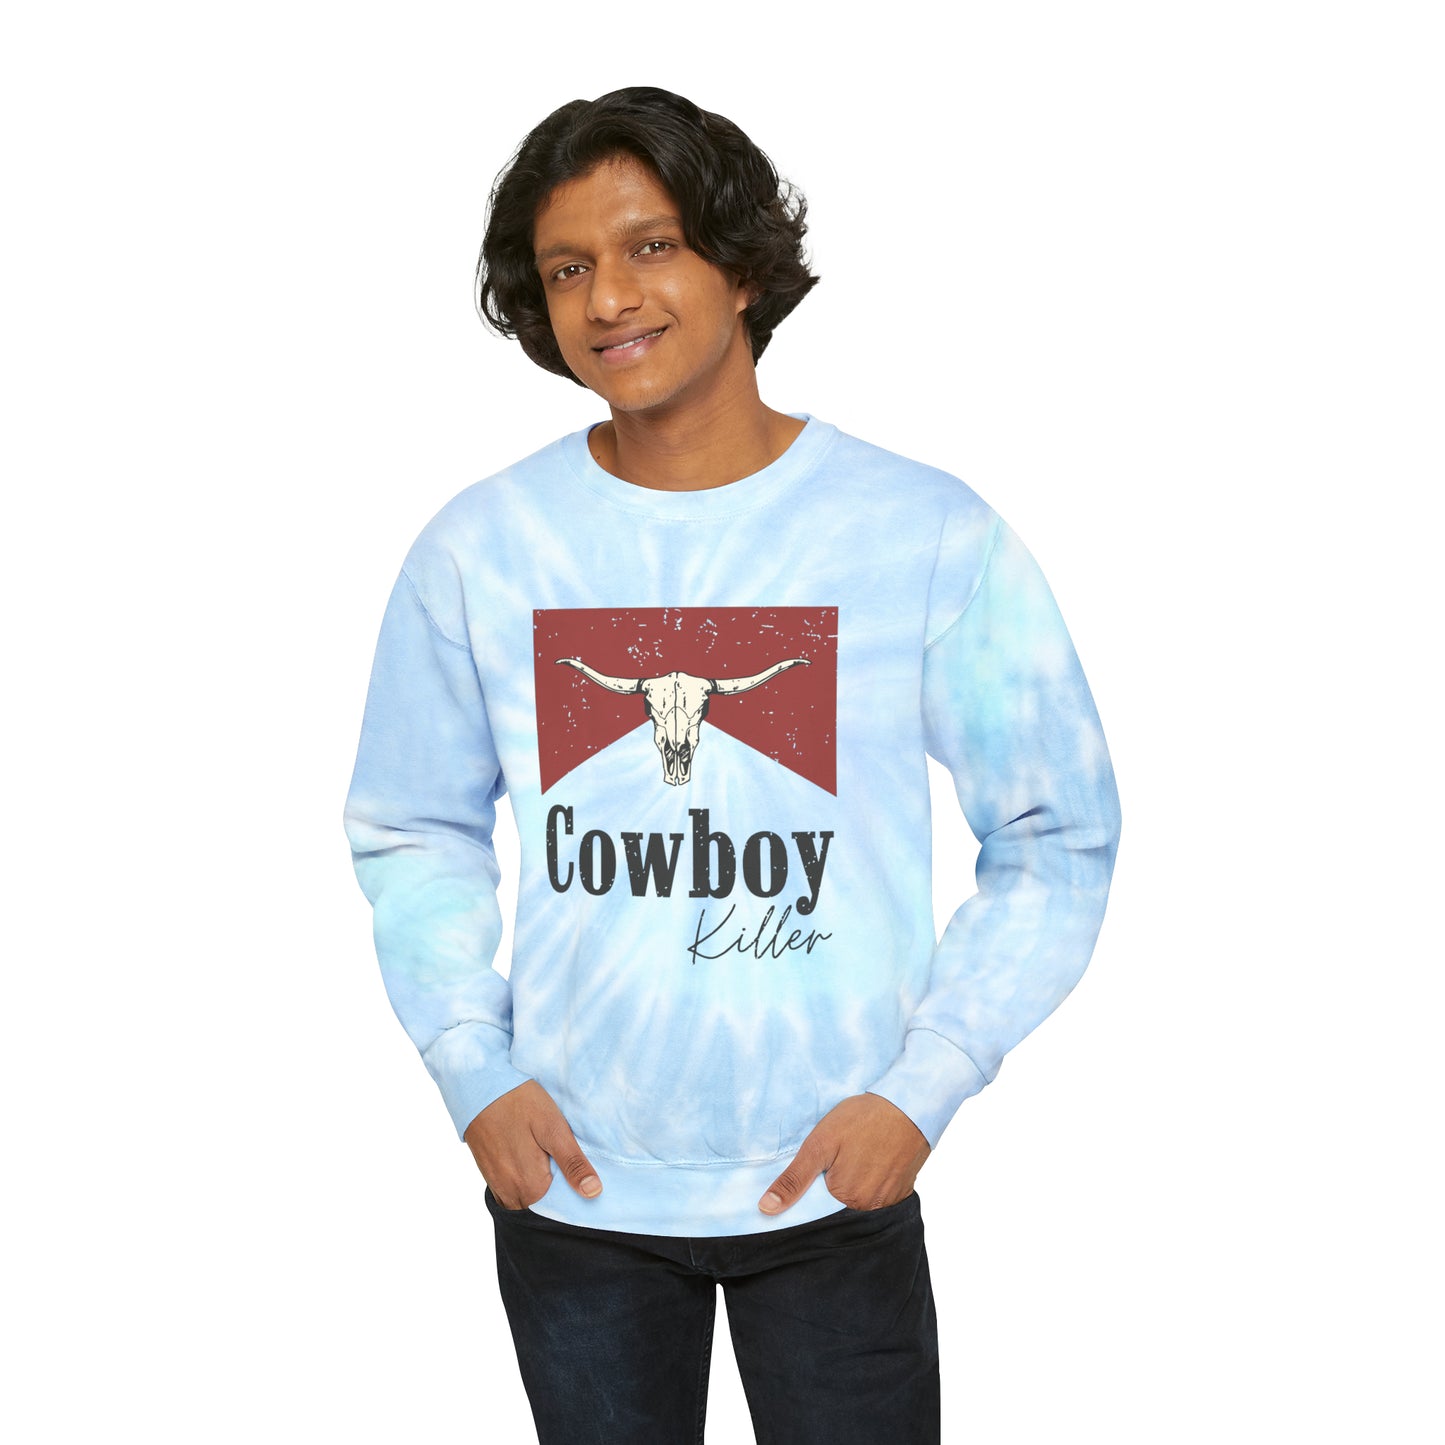 Morgan Wallen Cowboy Killer Unisex Tie-Dye Sweatshirt